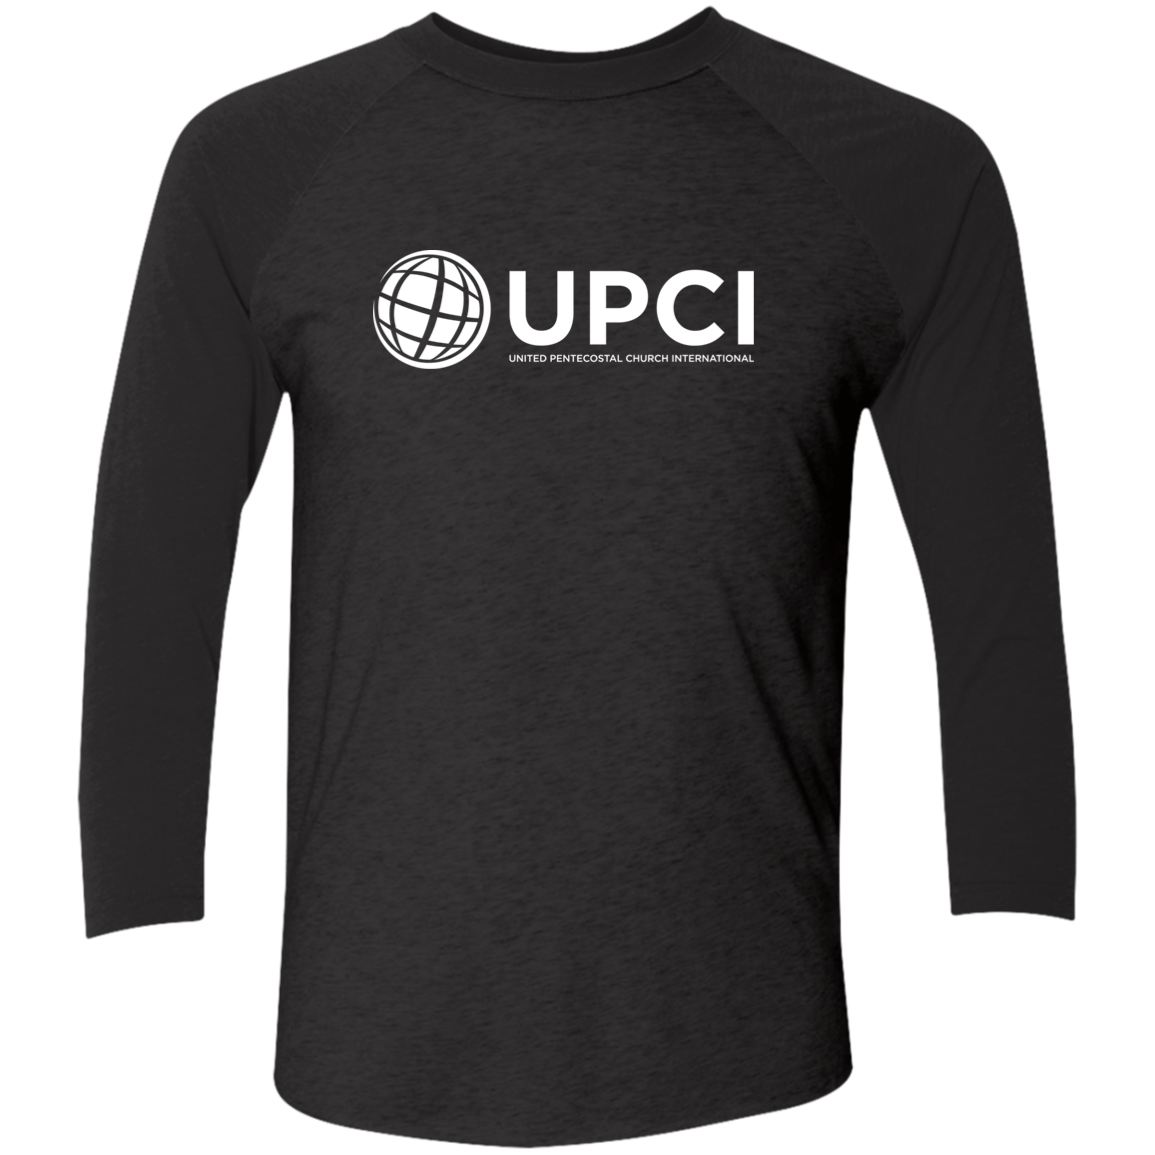 UPCI - 3/4 Sleeve Shirt